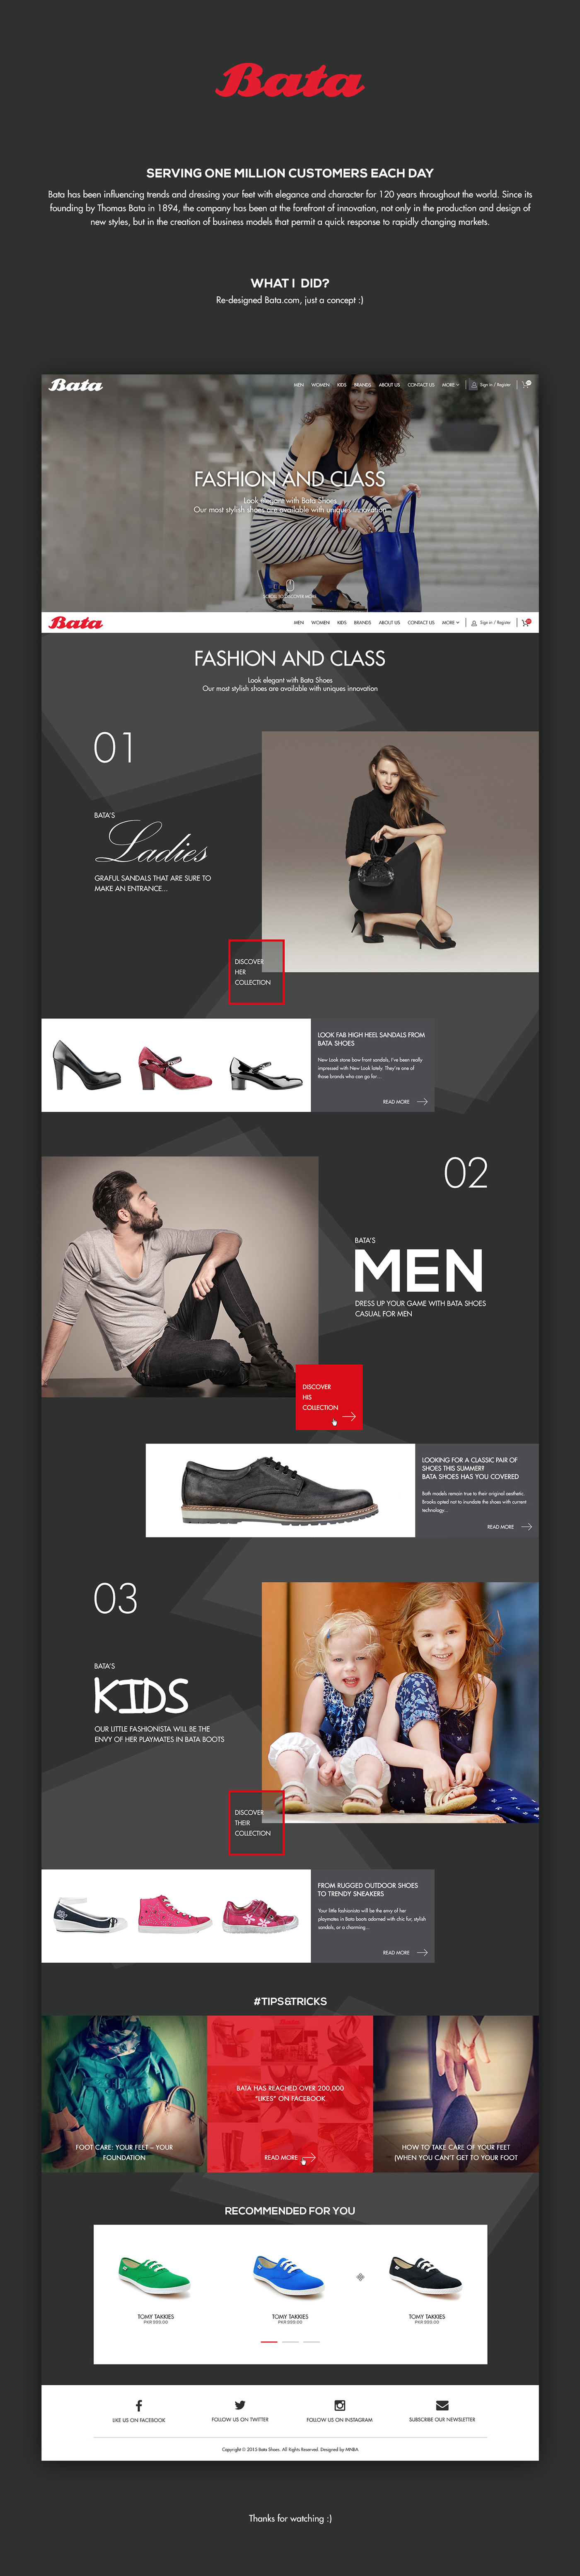 shoes bata men women kids Website Global casual Formal Ecommerce